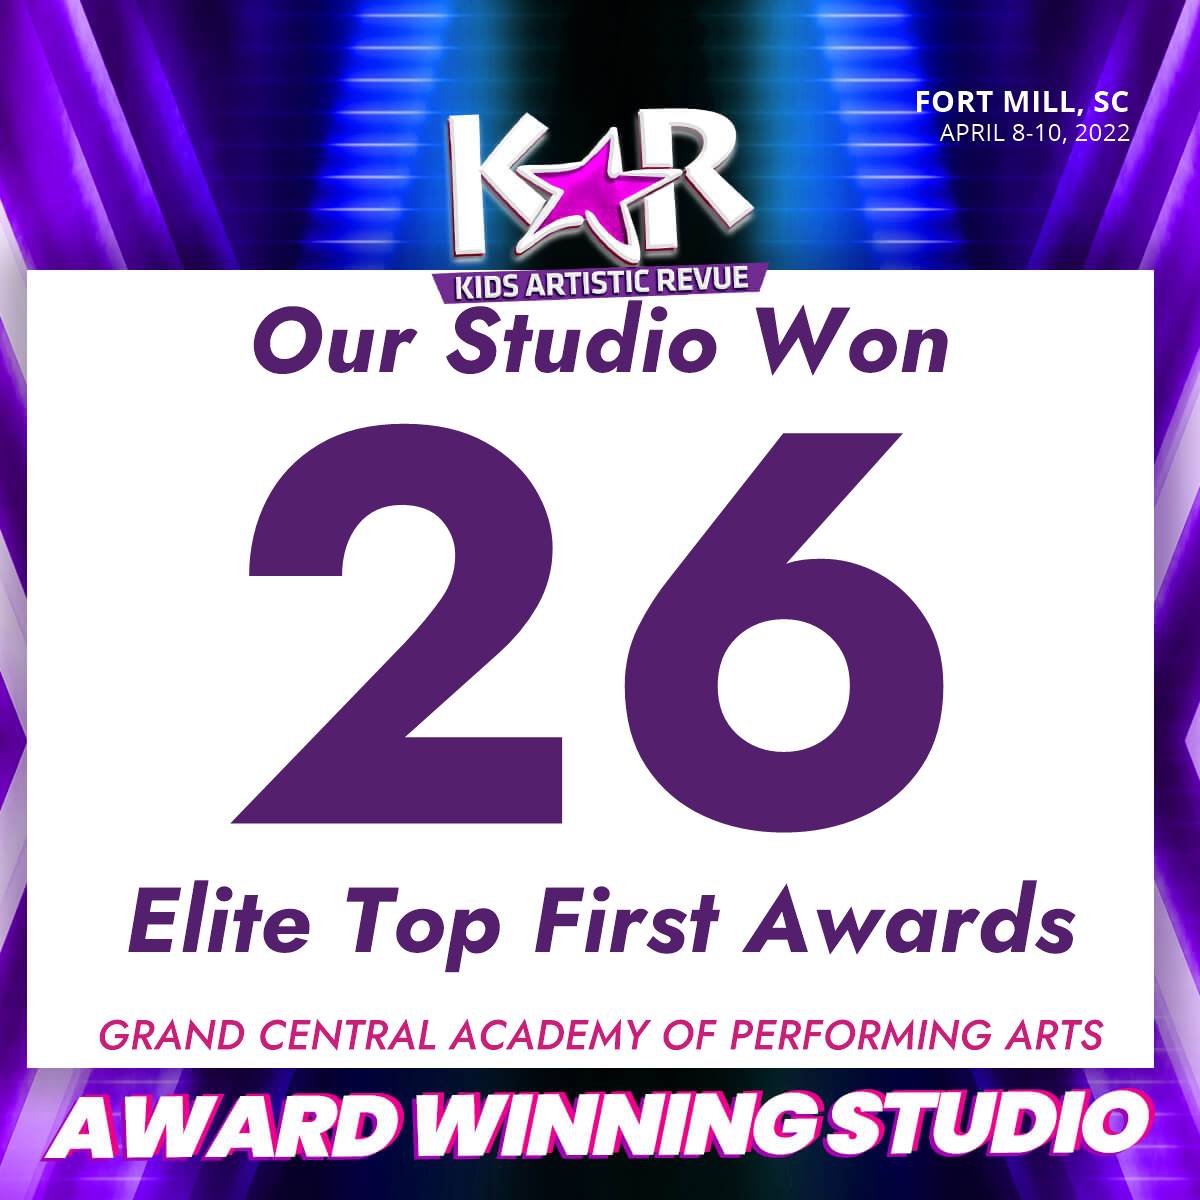 Elite Top First Awards